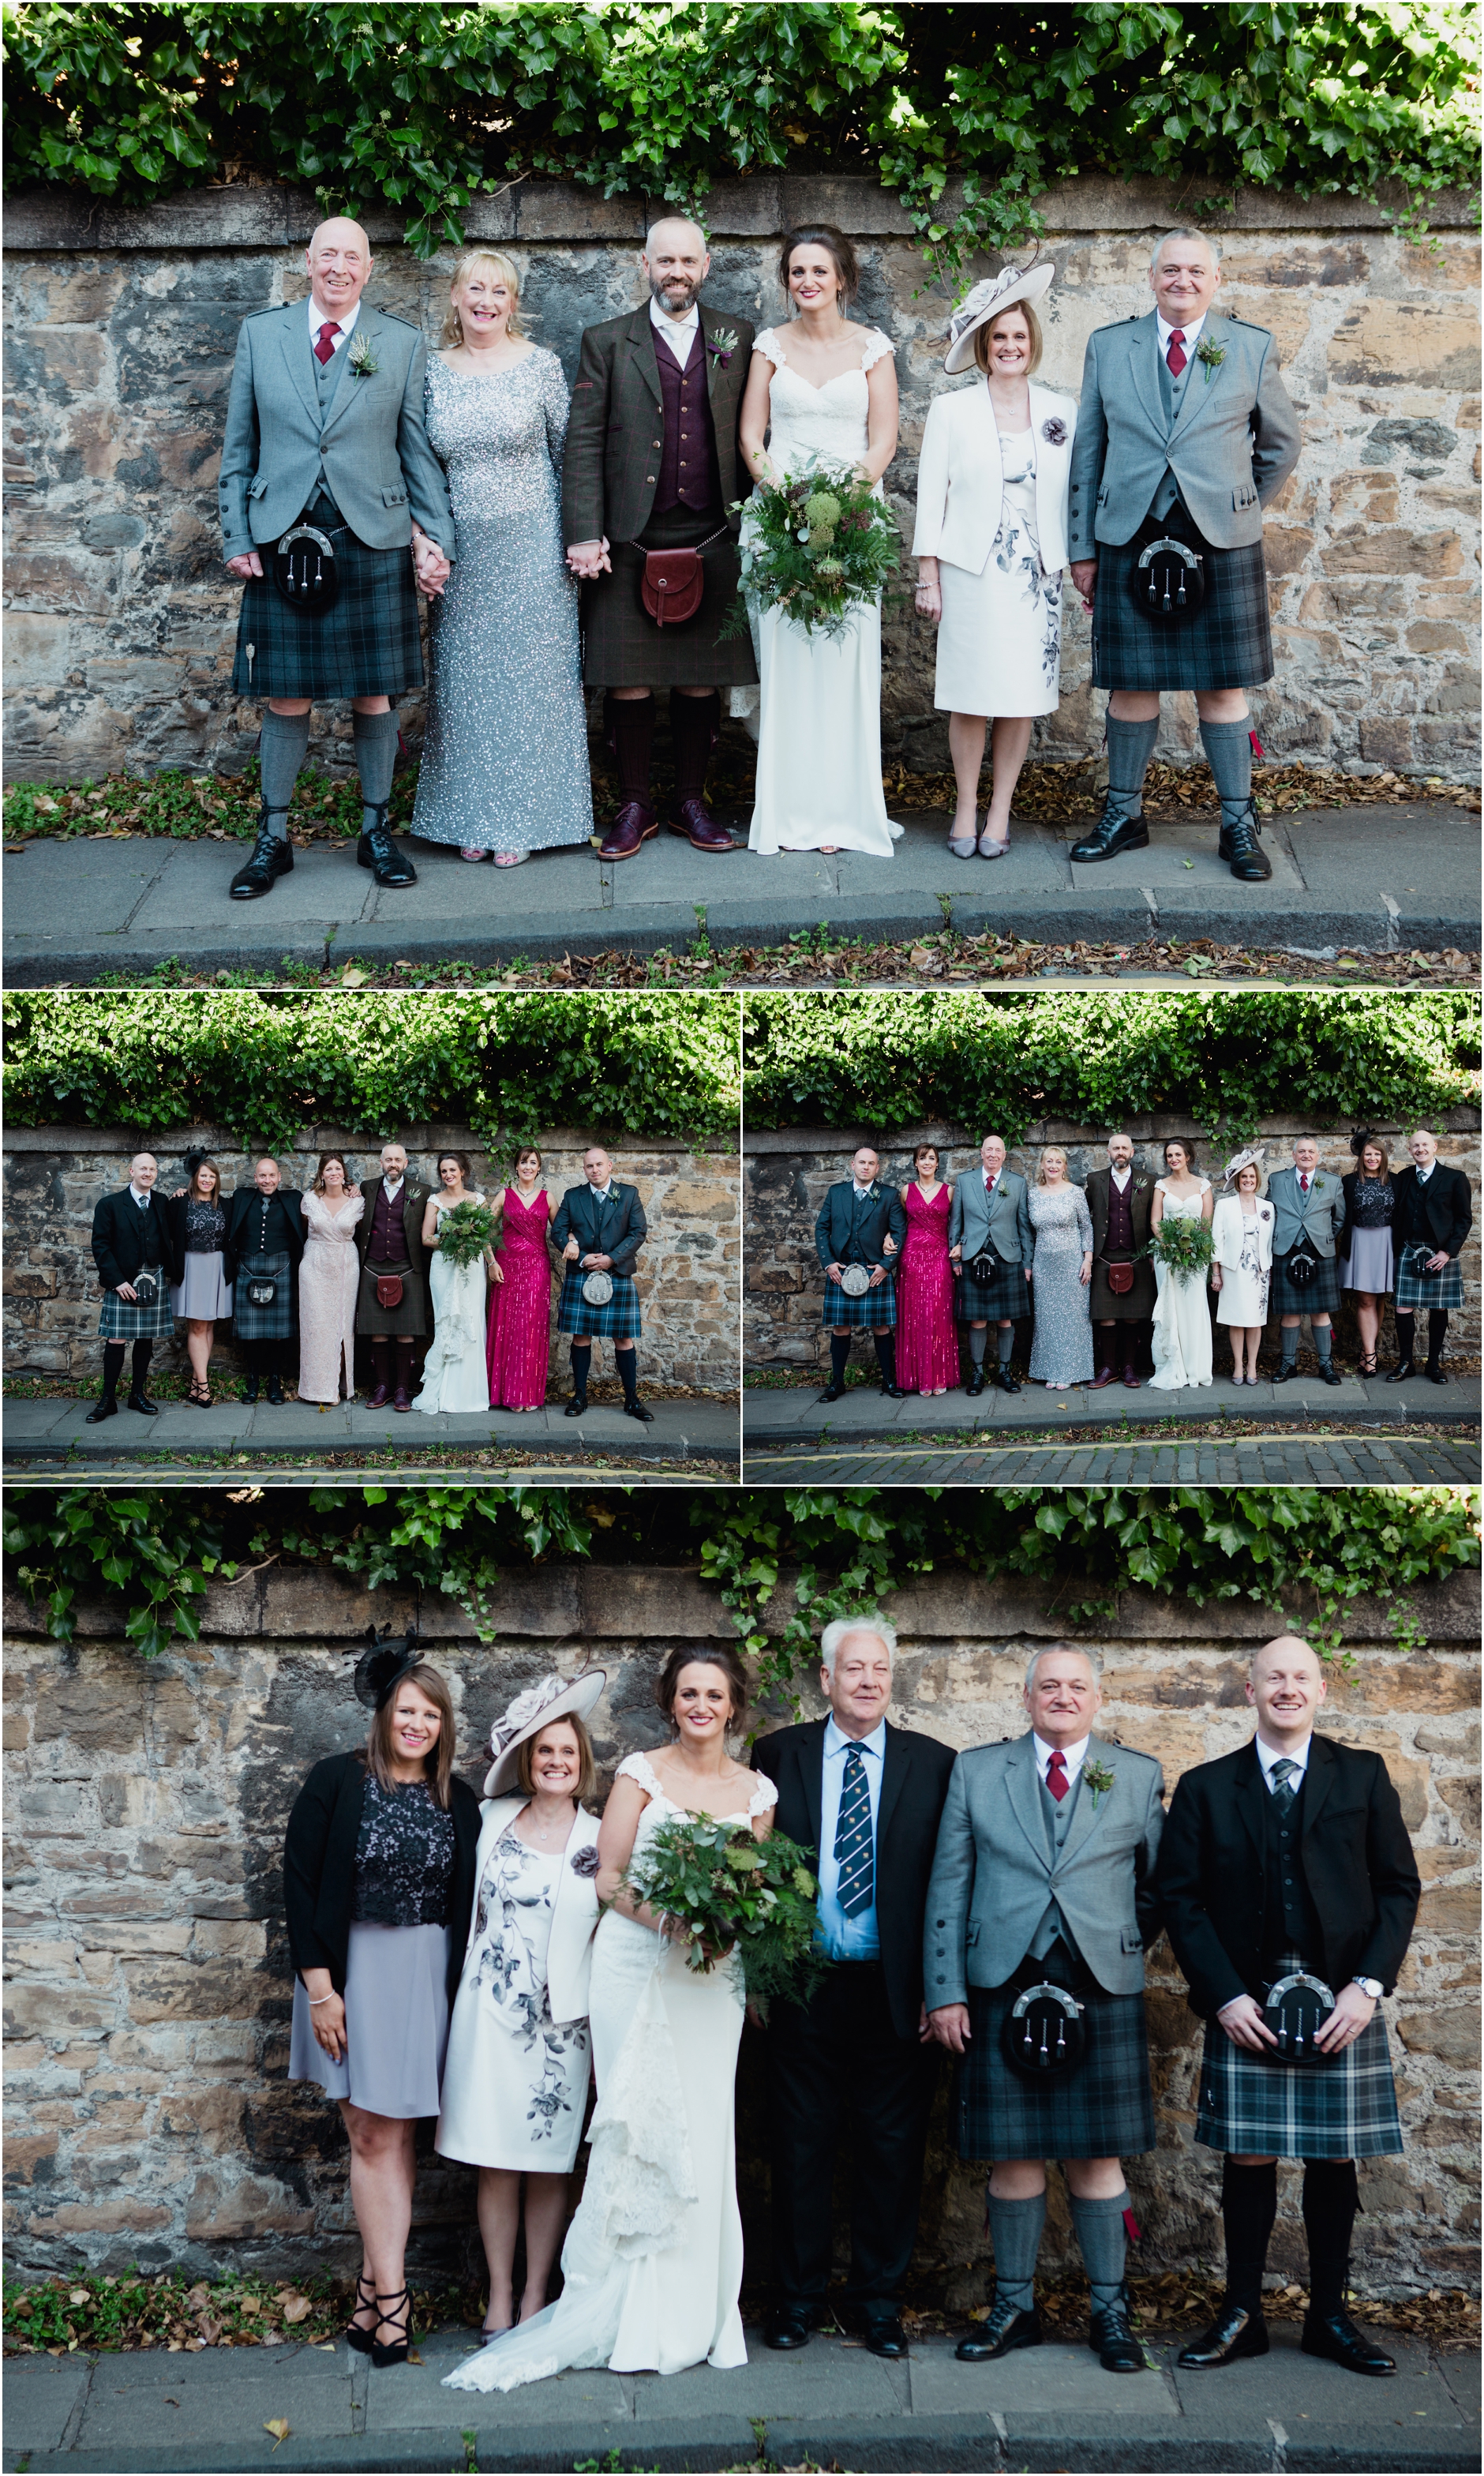 howies natural edinburgh wedding photographs